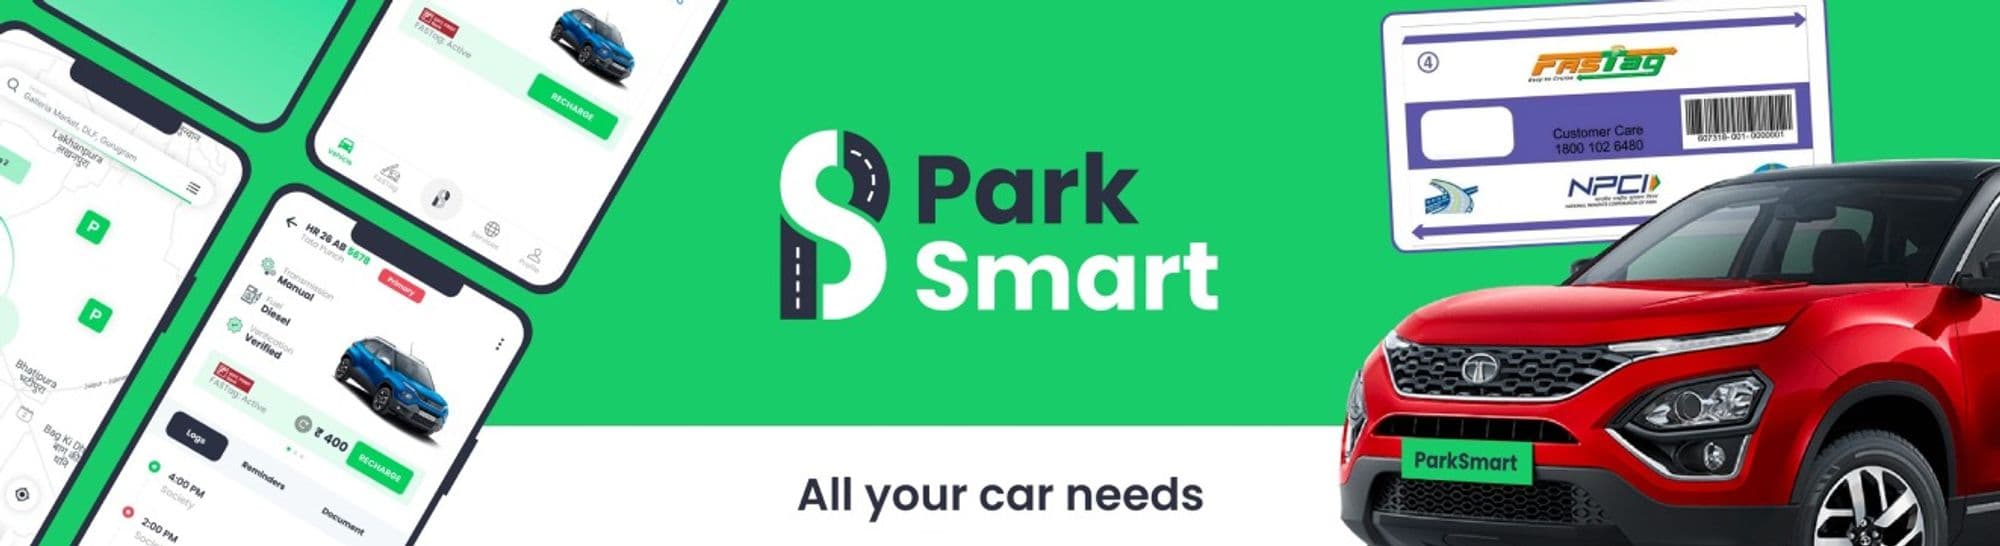 ParkSmart Cover Image